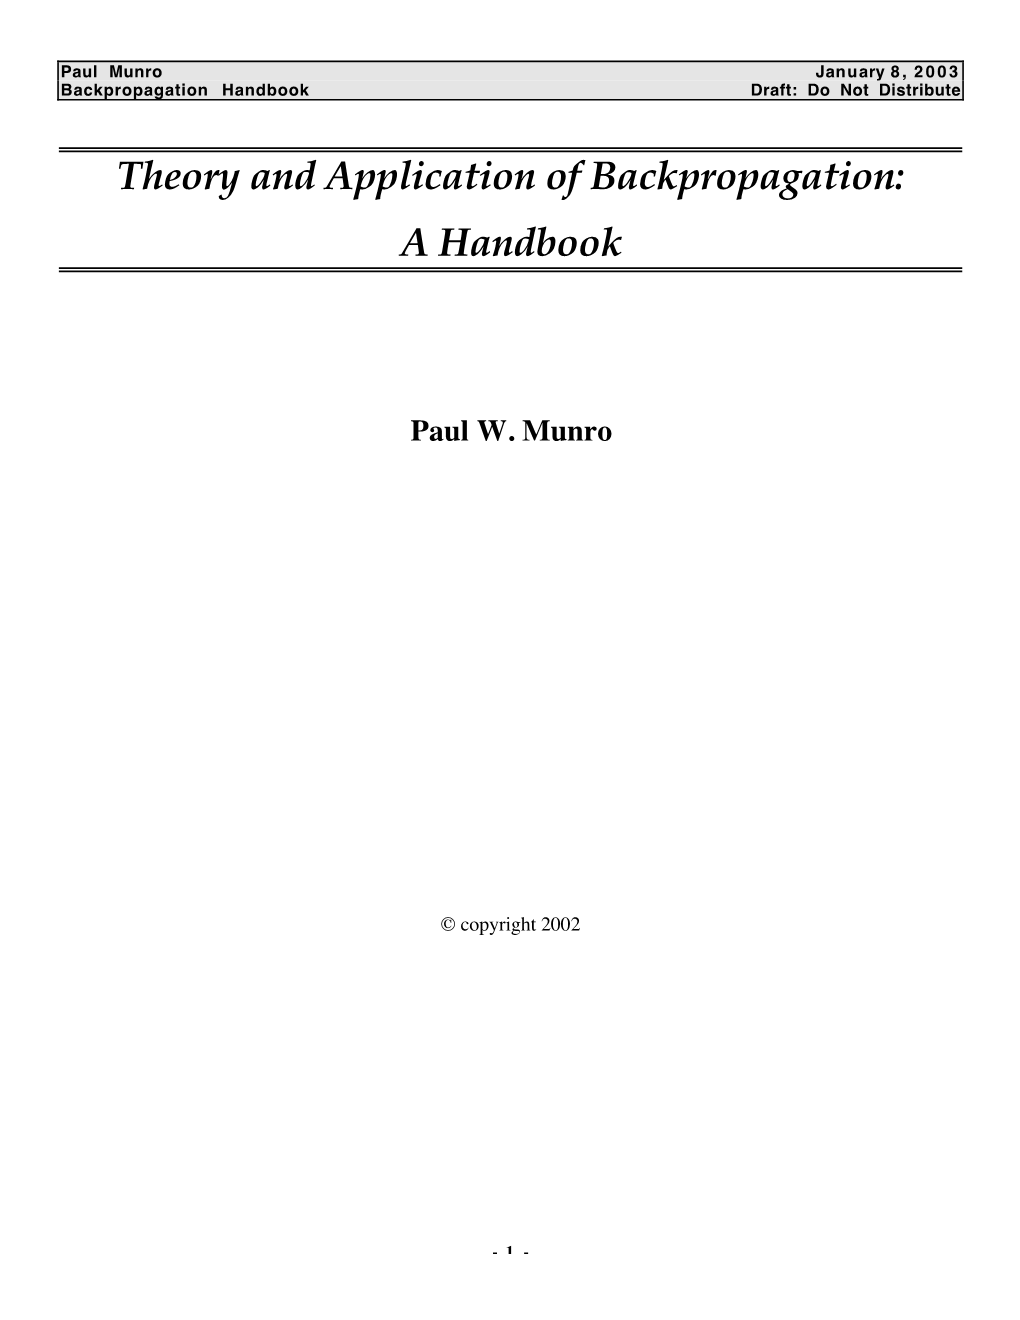 Theory and Application of Backpropagation: a Handbook